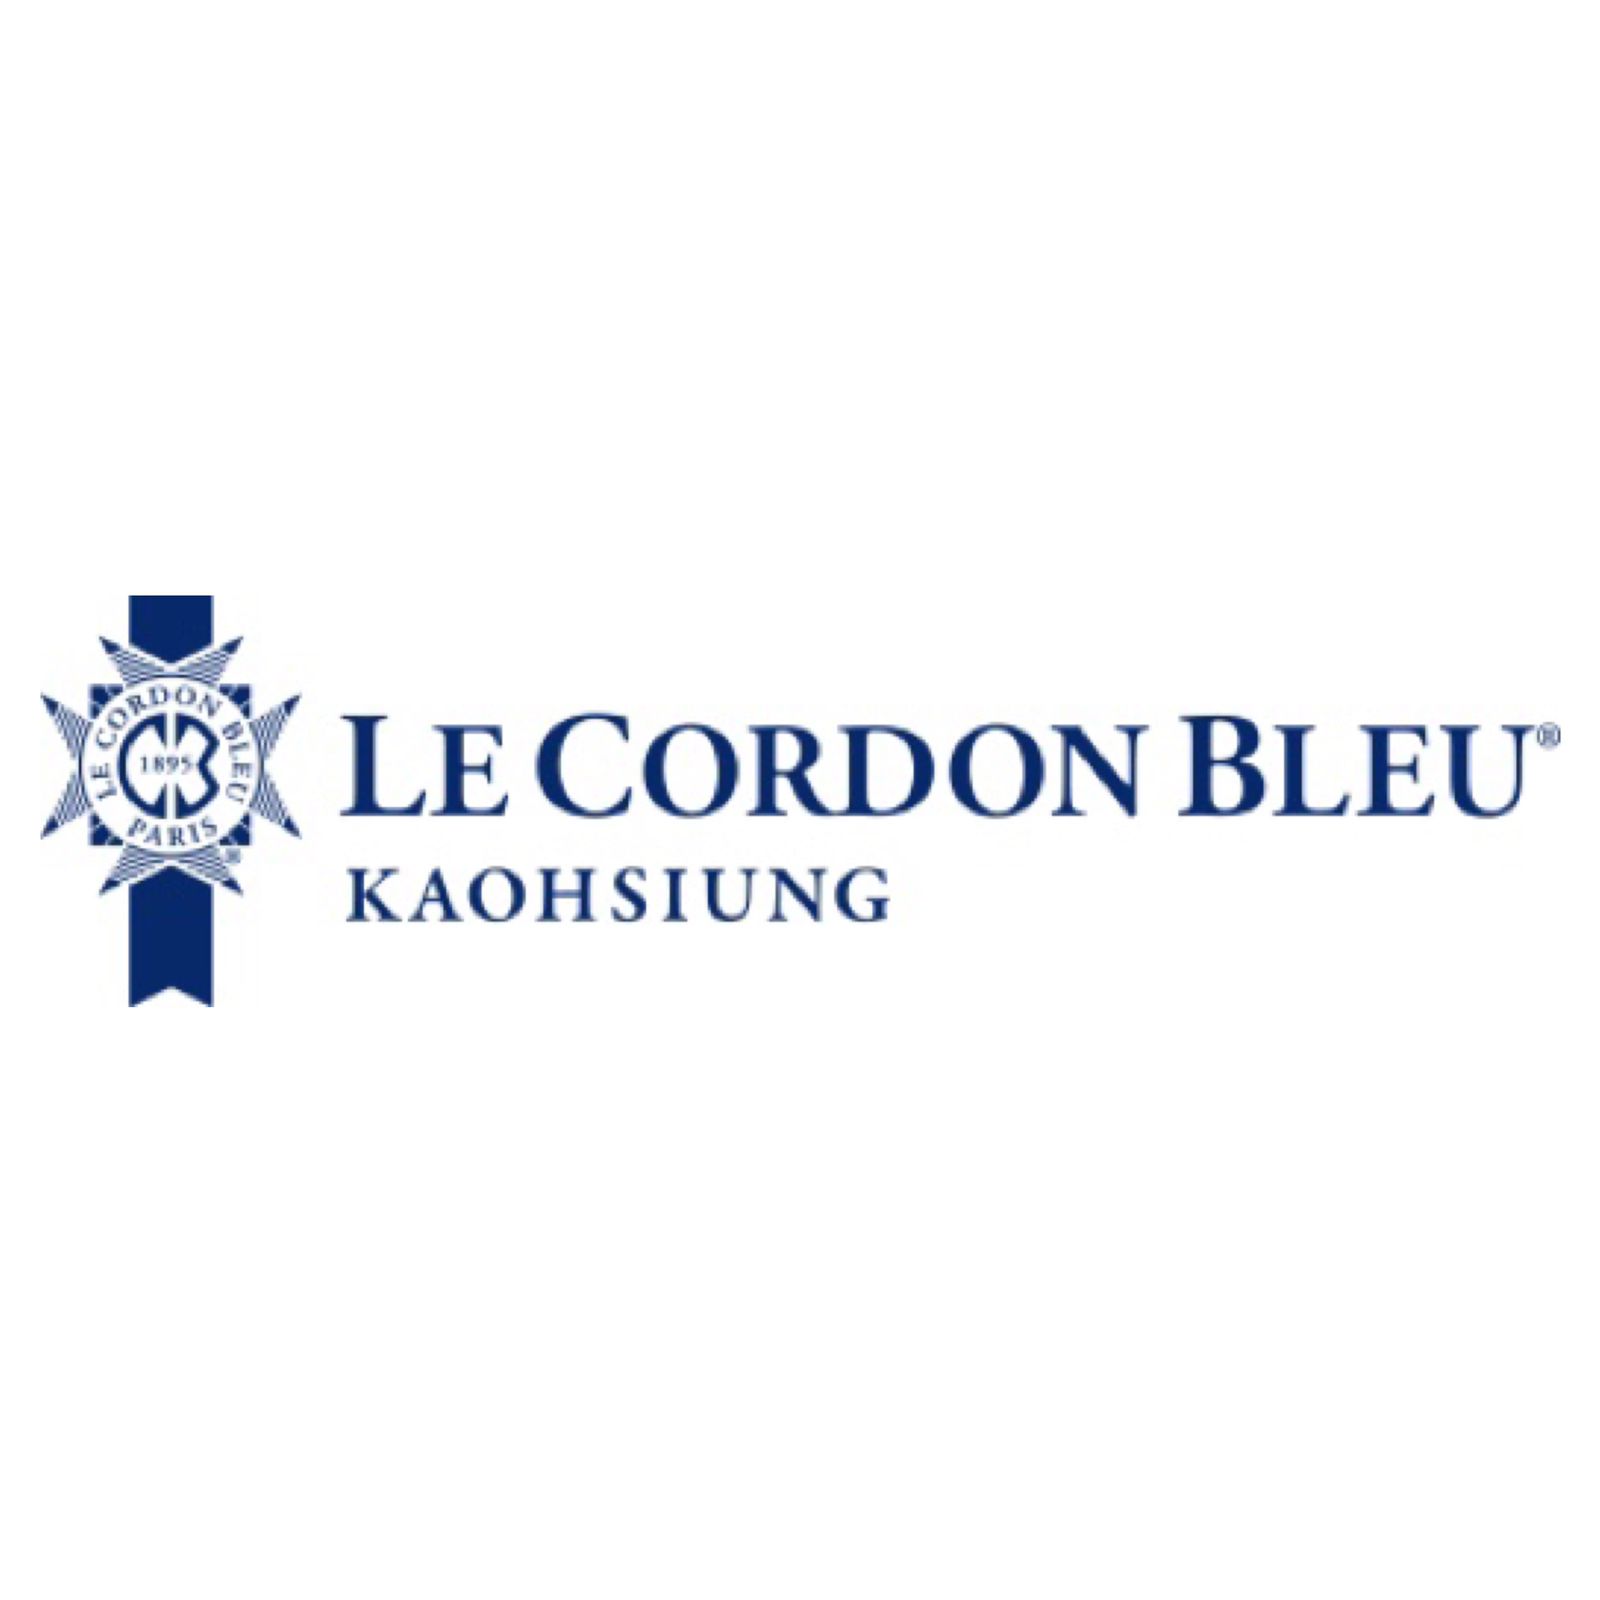 Le Cordon Bleu Taiwan